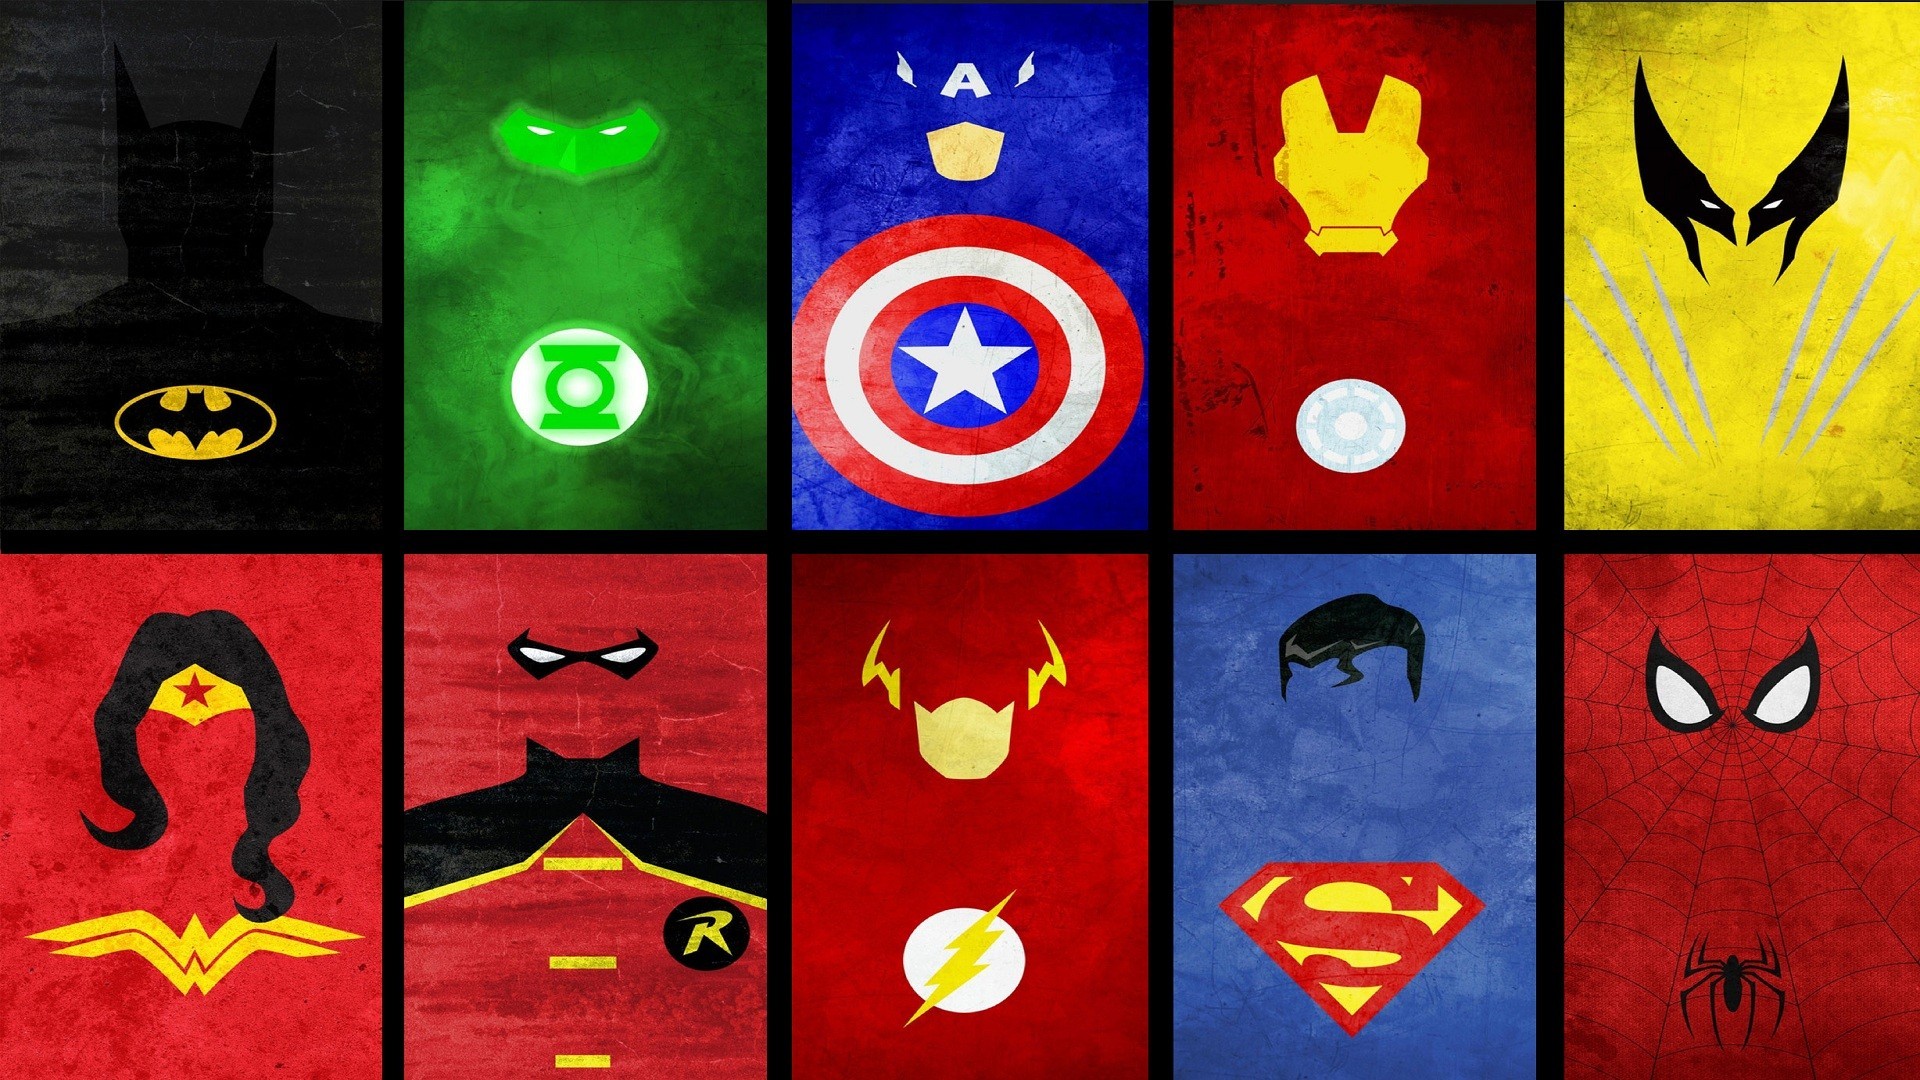 Superhero Wallpapers